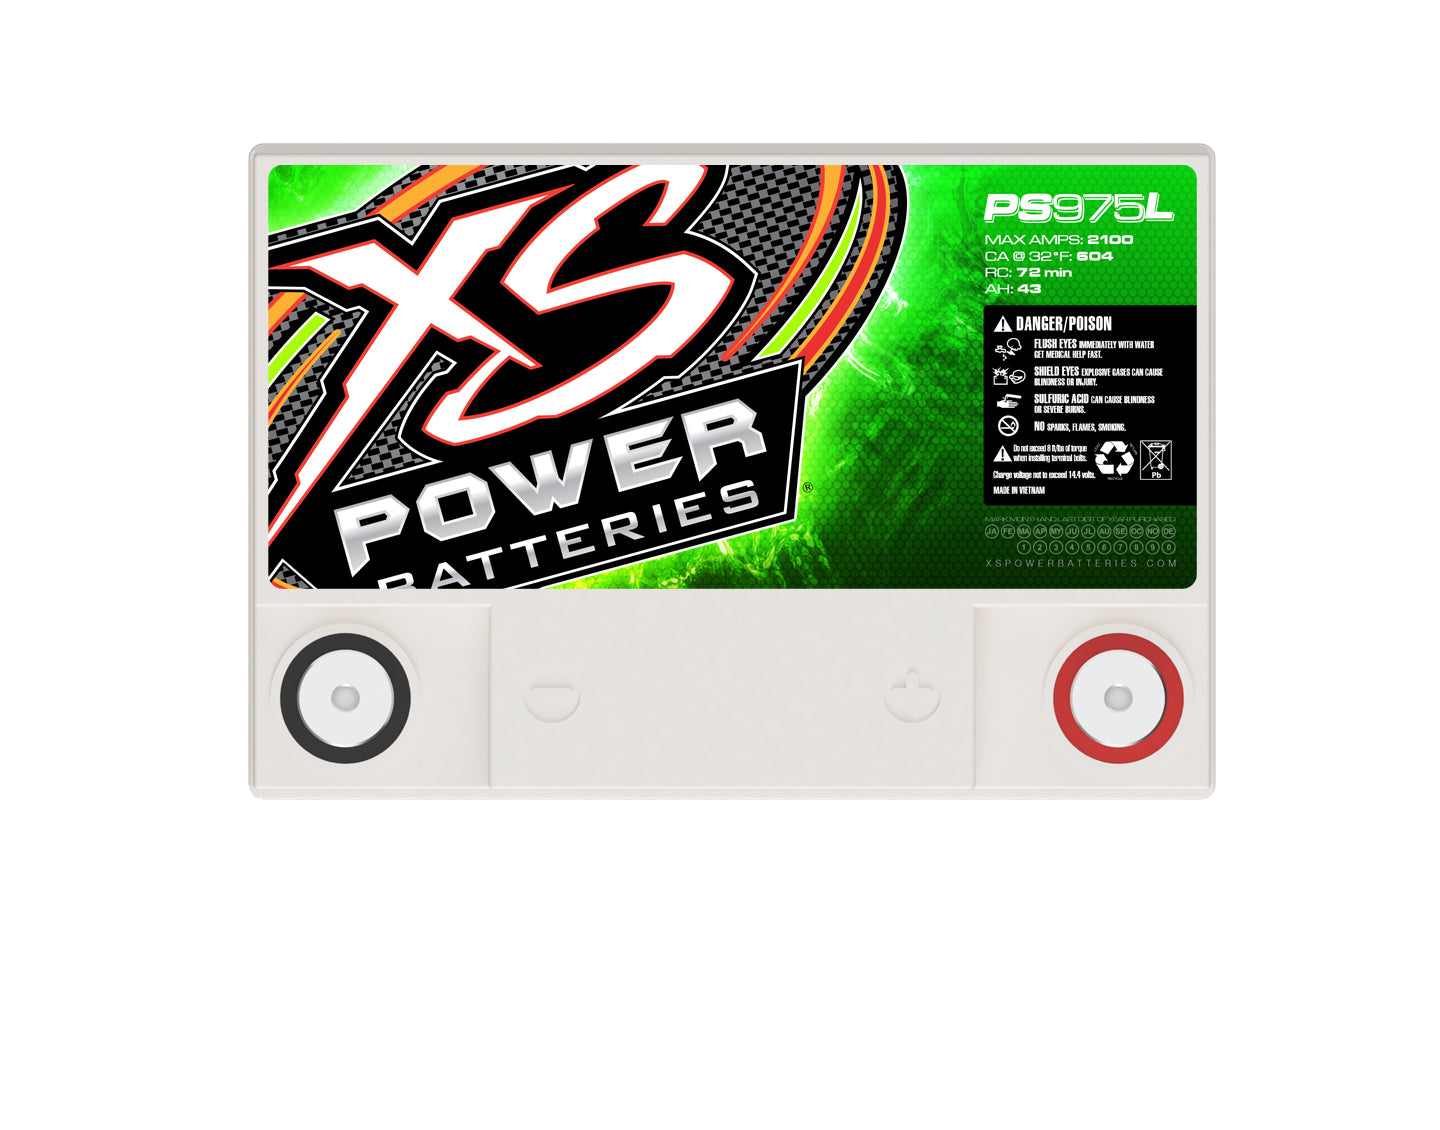 PS975L XS Power 12VDC Group U1R AGM Powersports Battery 2100A 43Ah